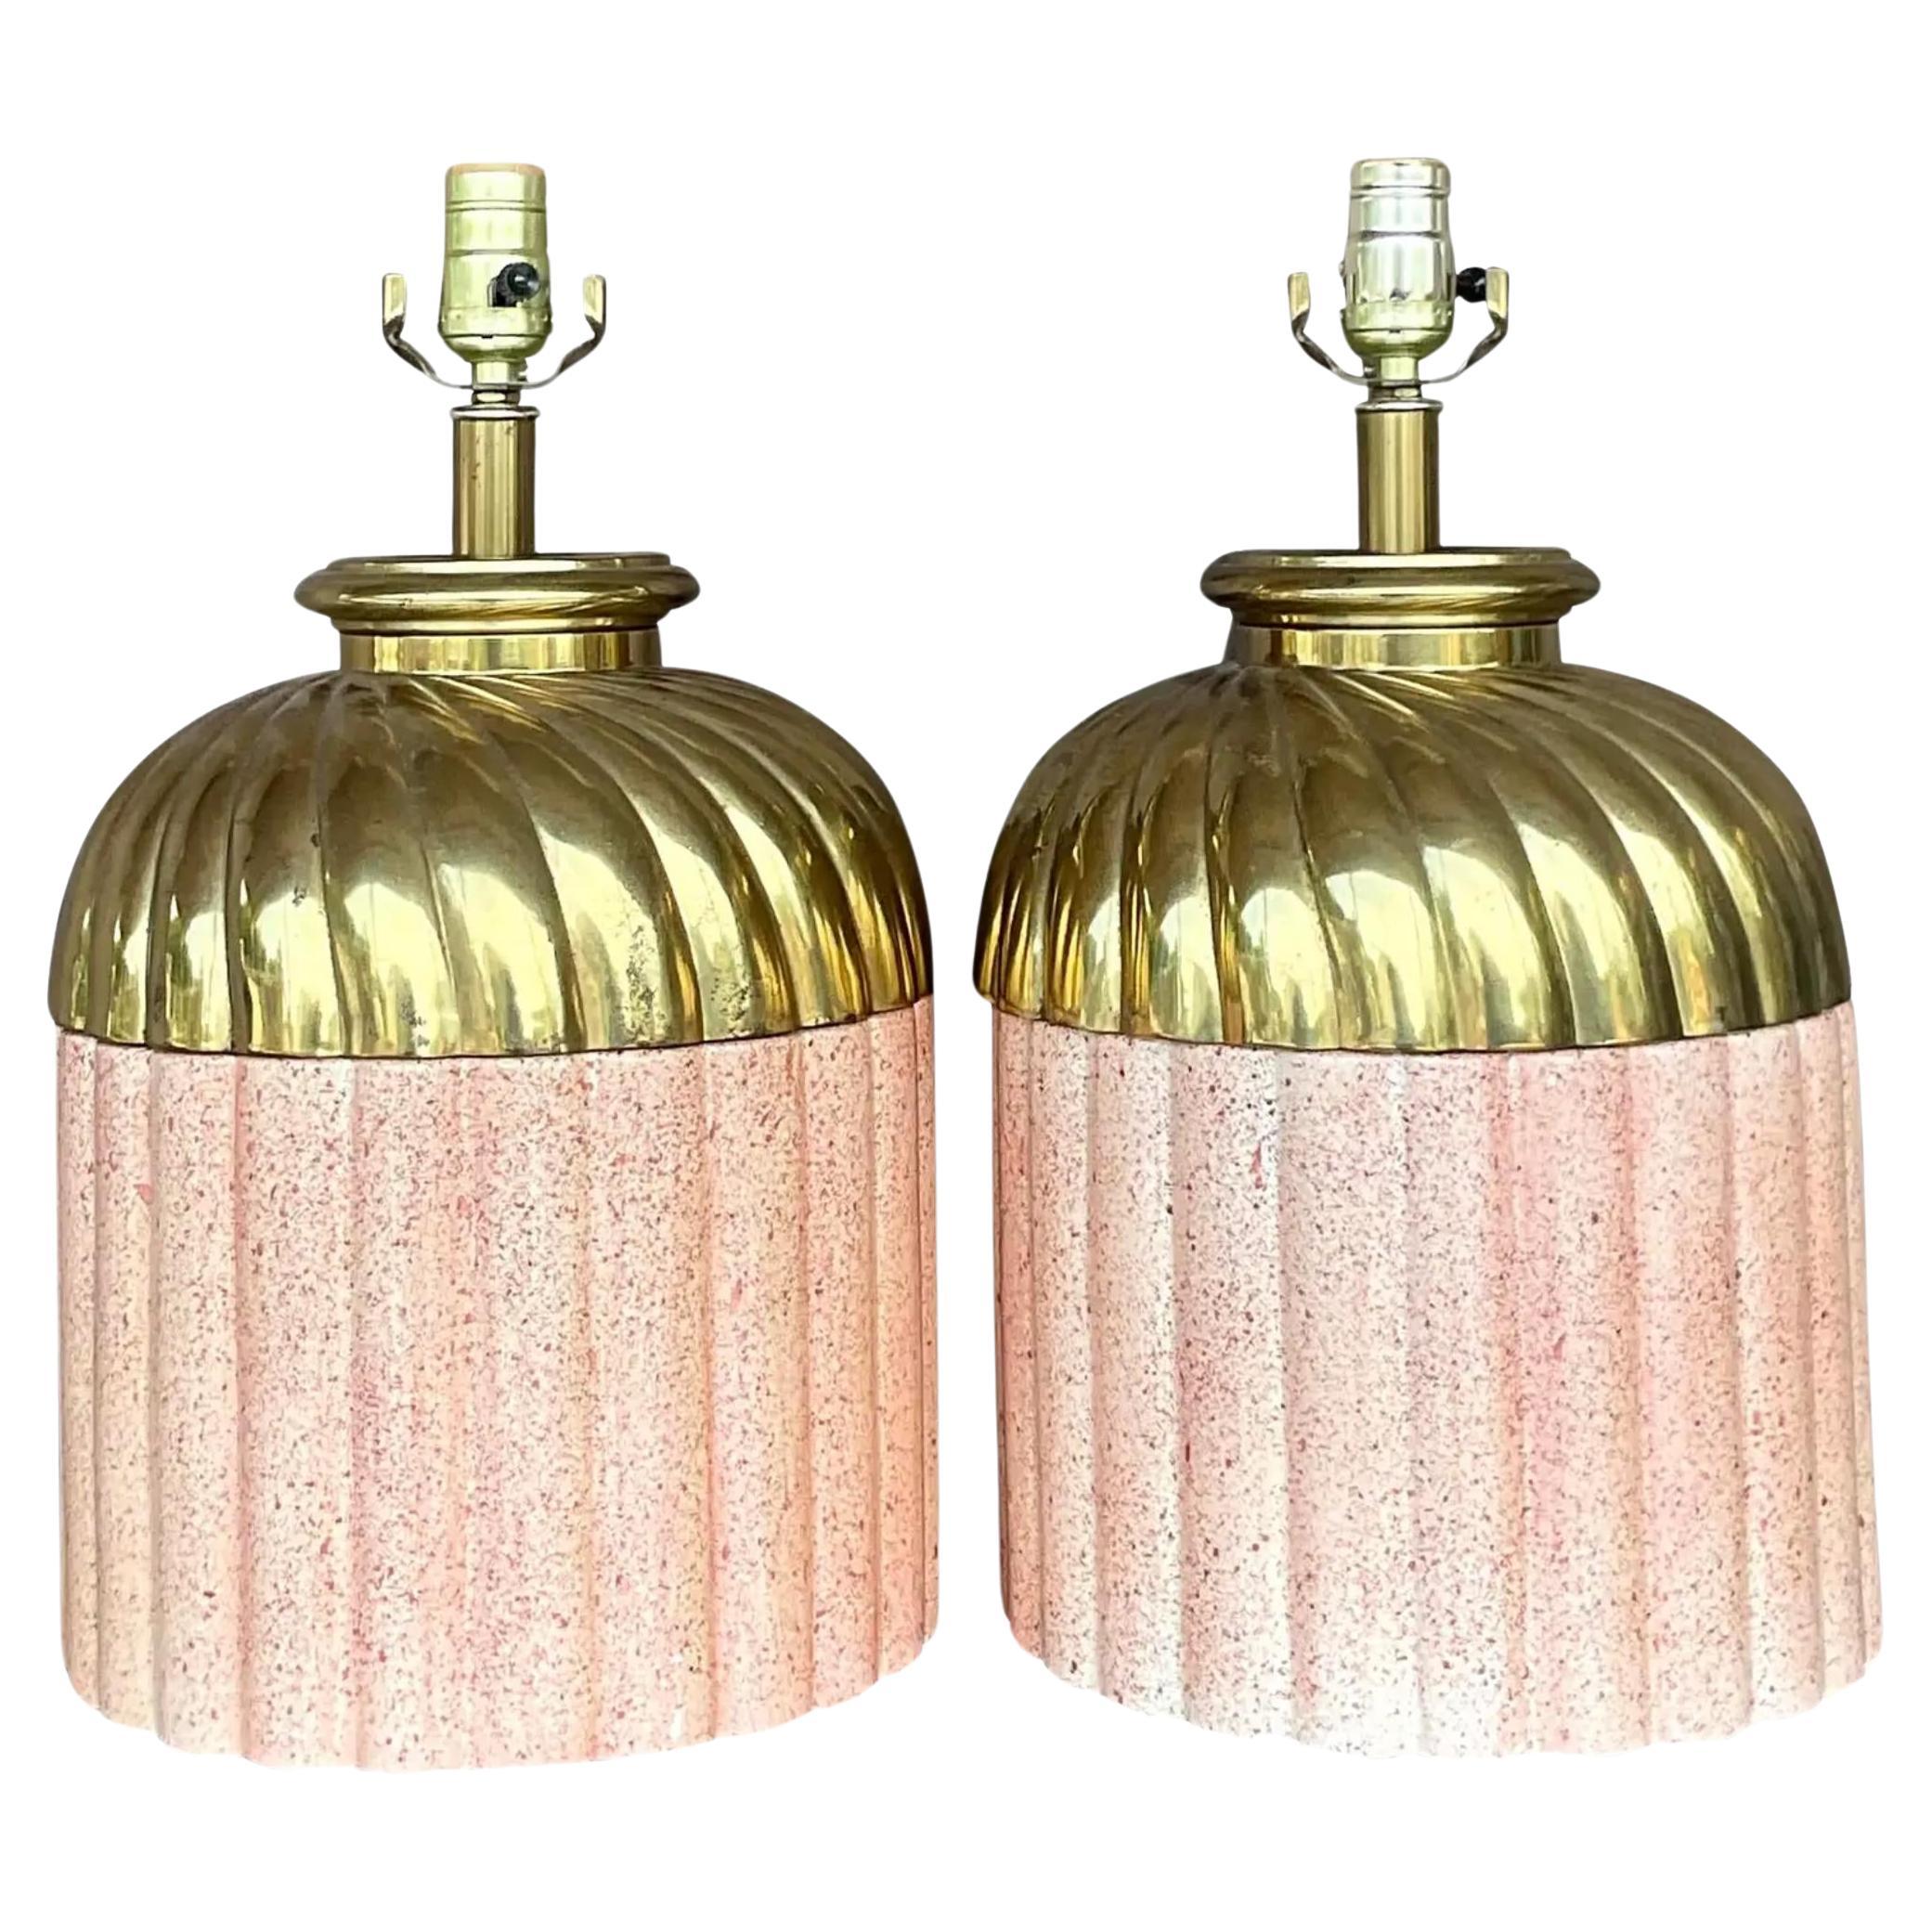 Vintage Boho-Lampen aus Messing und Keramik - ein Paar im Angebot